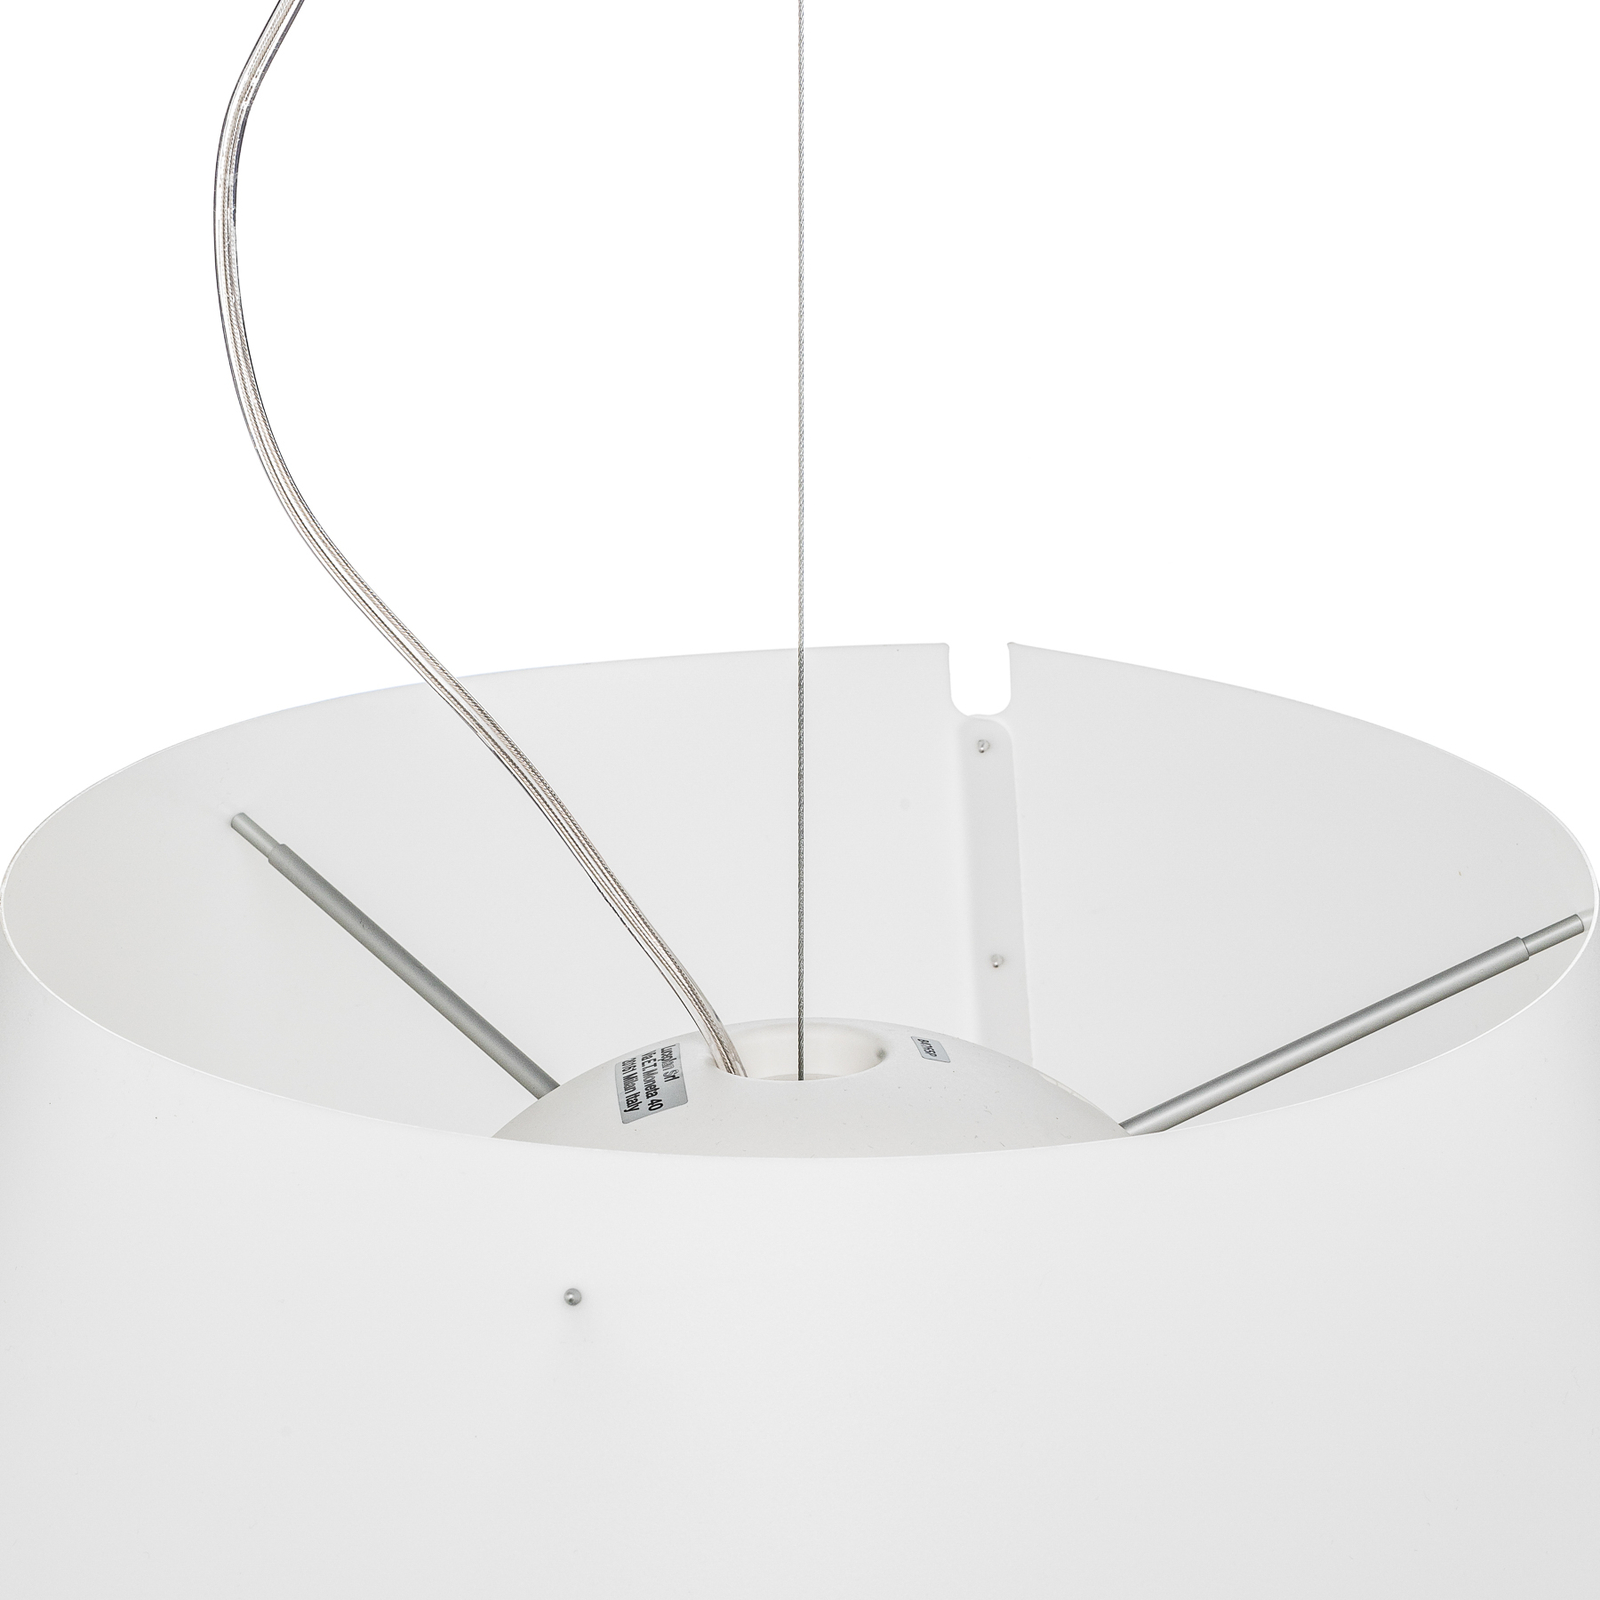 Luceplan Grande Costanza - fehér függő lámpa